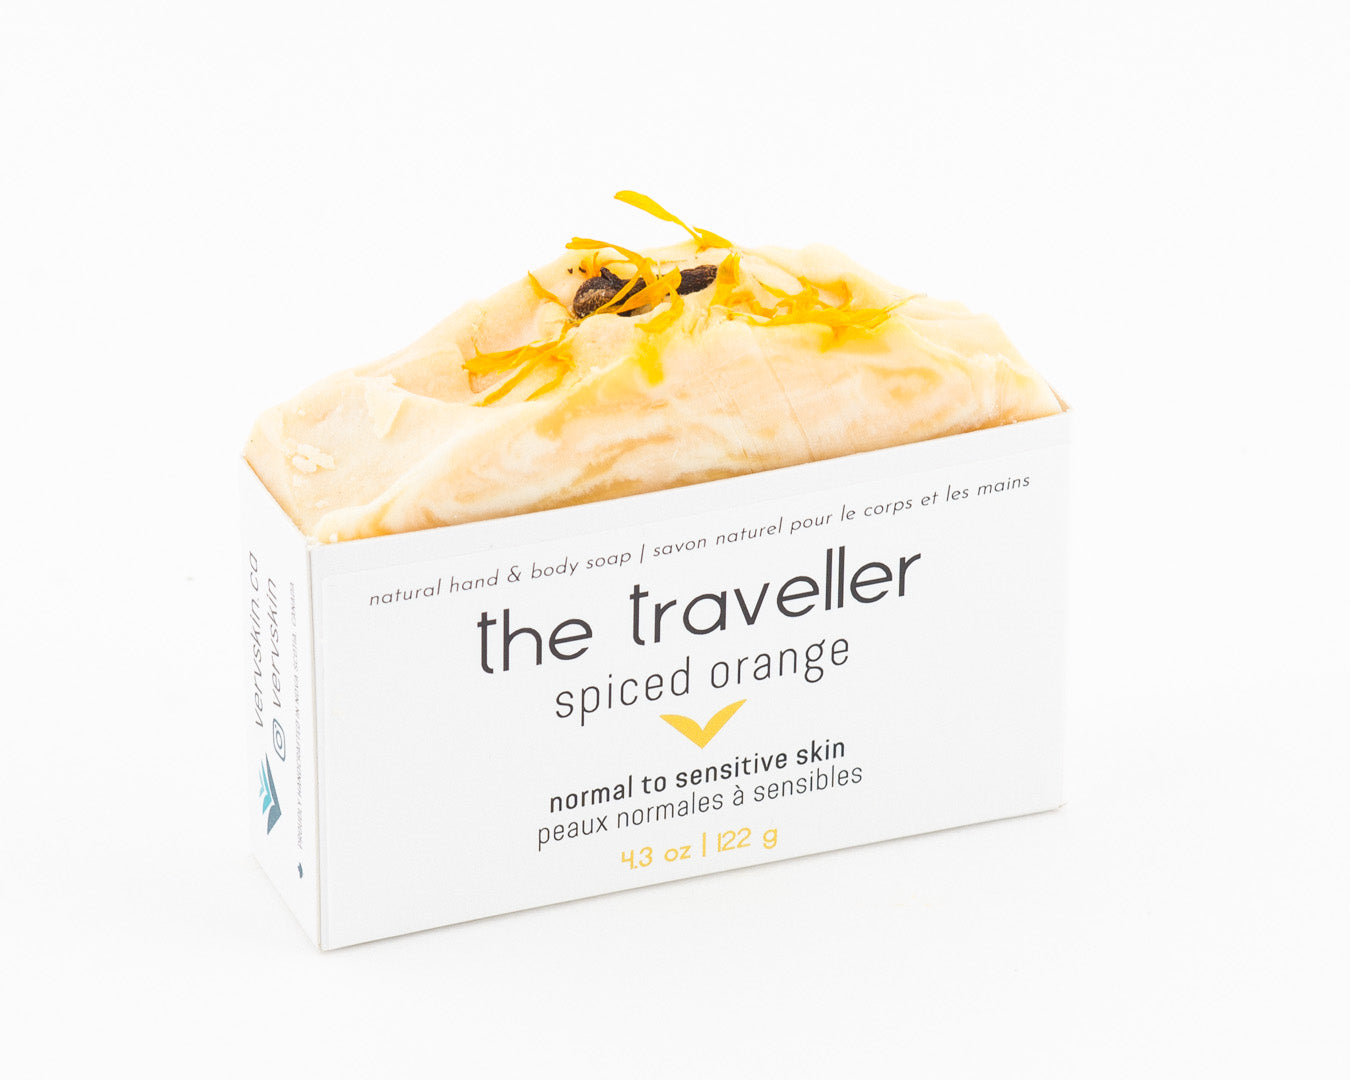 The Traveller | Spiced Orange Soap